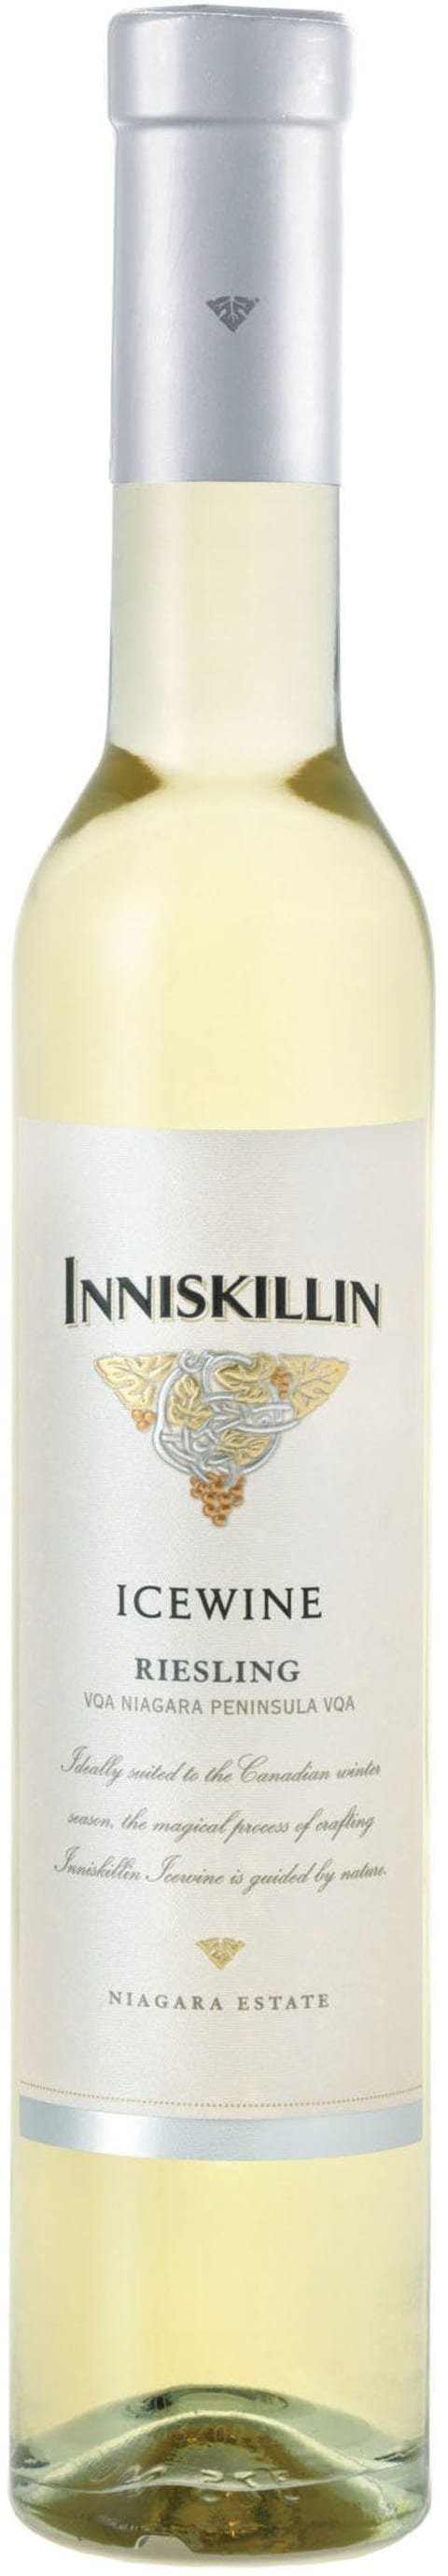 Inniskillin Riesling Icewine (375ML half-bottle) 2019